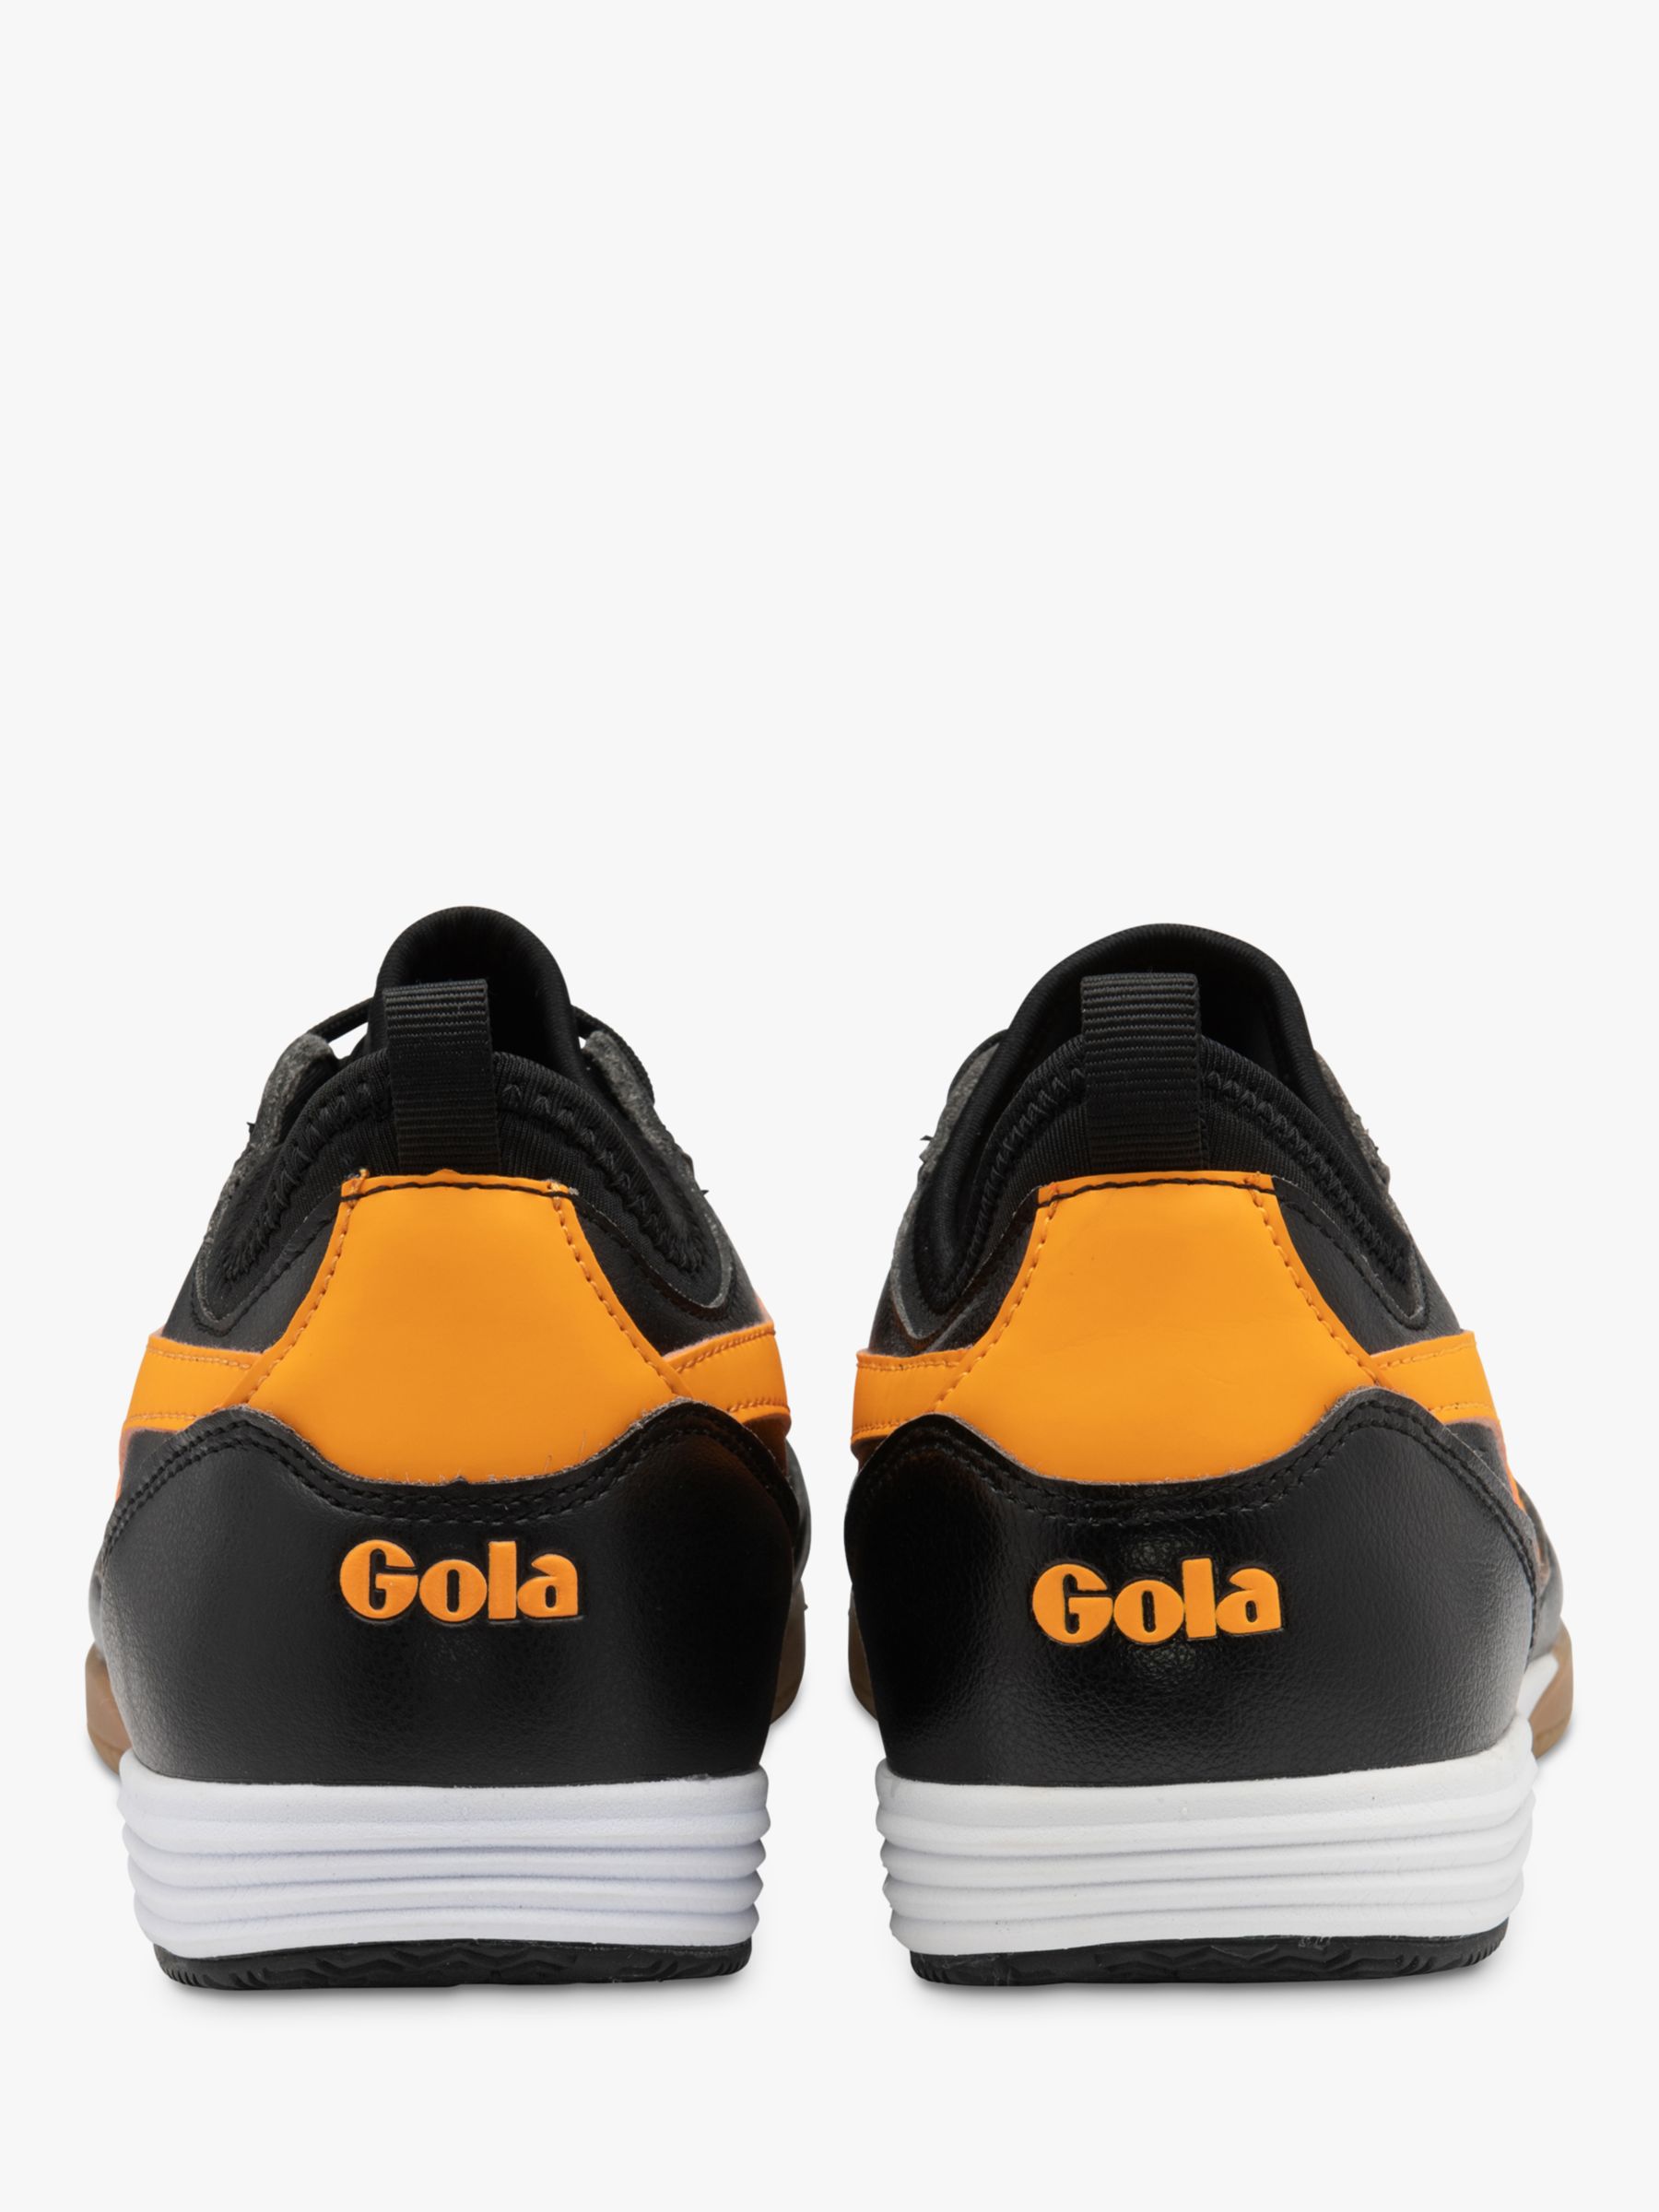 Buy Gola Performance Ceptor TX Football Boots, Black/Sun Online at johnlewis.com